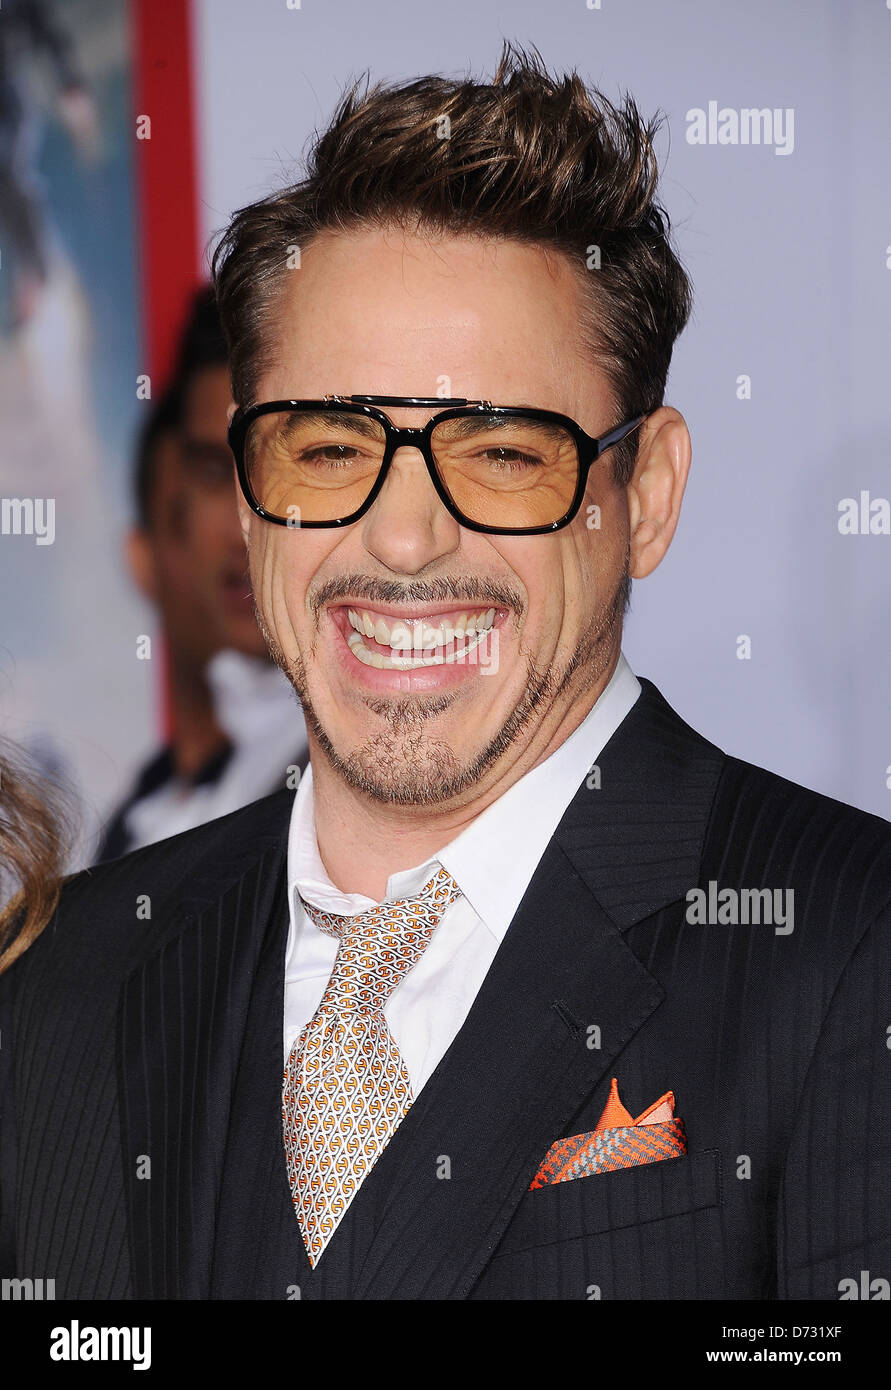 BOBERT DOWNEY Jr. U.S. Filmschauspieler bei LA Premiere von Iron Man 3 im April 2013. Foto Jeffrey Mayer Stockfoto